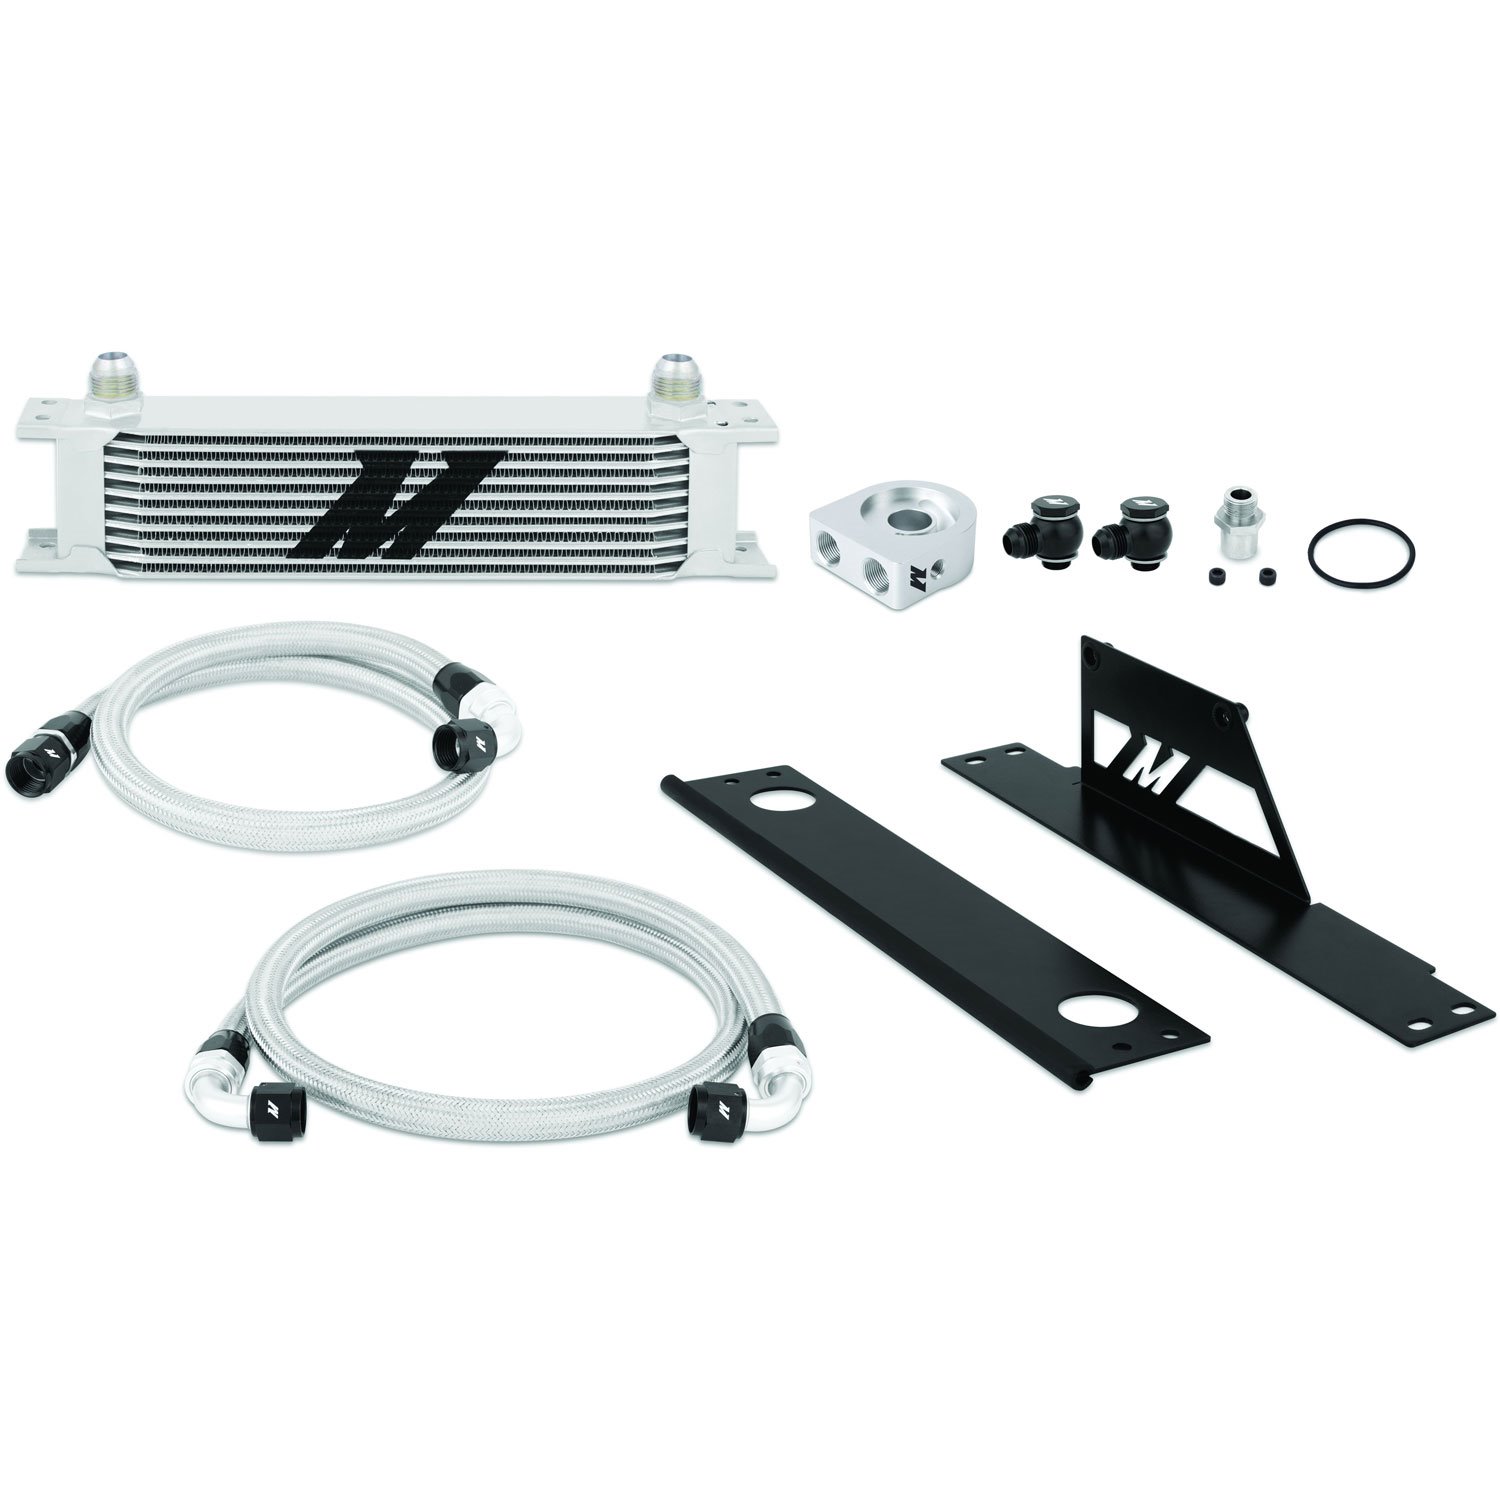 Subaru WRX and STI Oil Cooler Kit - MFG Part No. MMOC-WRX-01